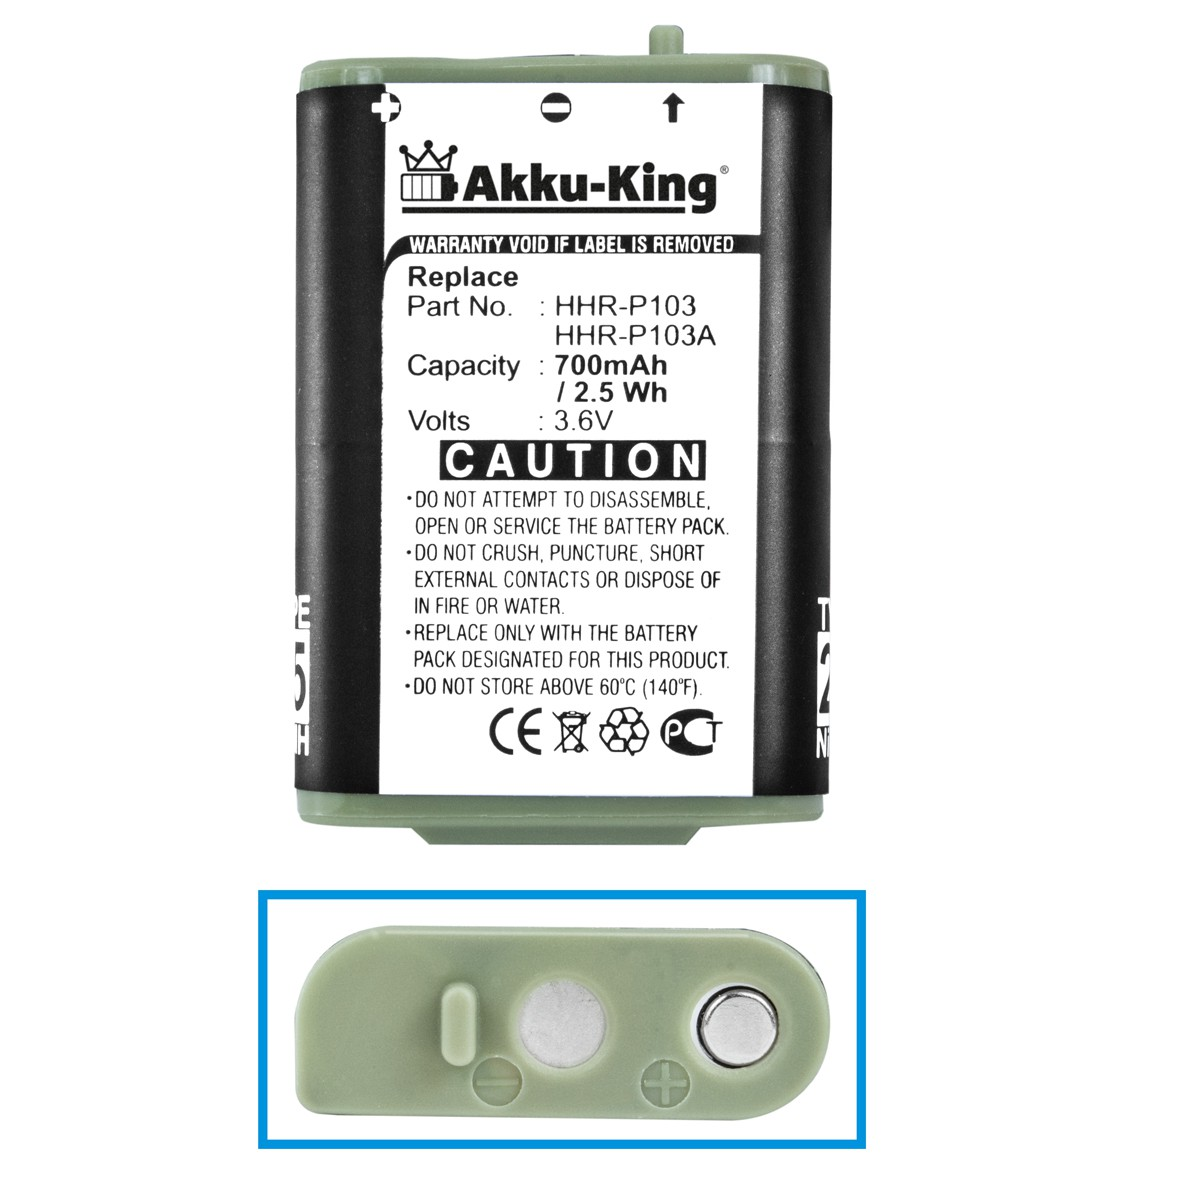 AKKU-KING Akku kompatibel mit Panasonic Volt, Ni-MH 700mAh HHR-P103 Geräte-Akku, 3.6